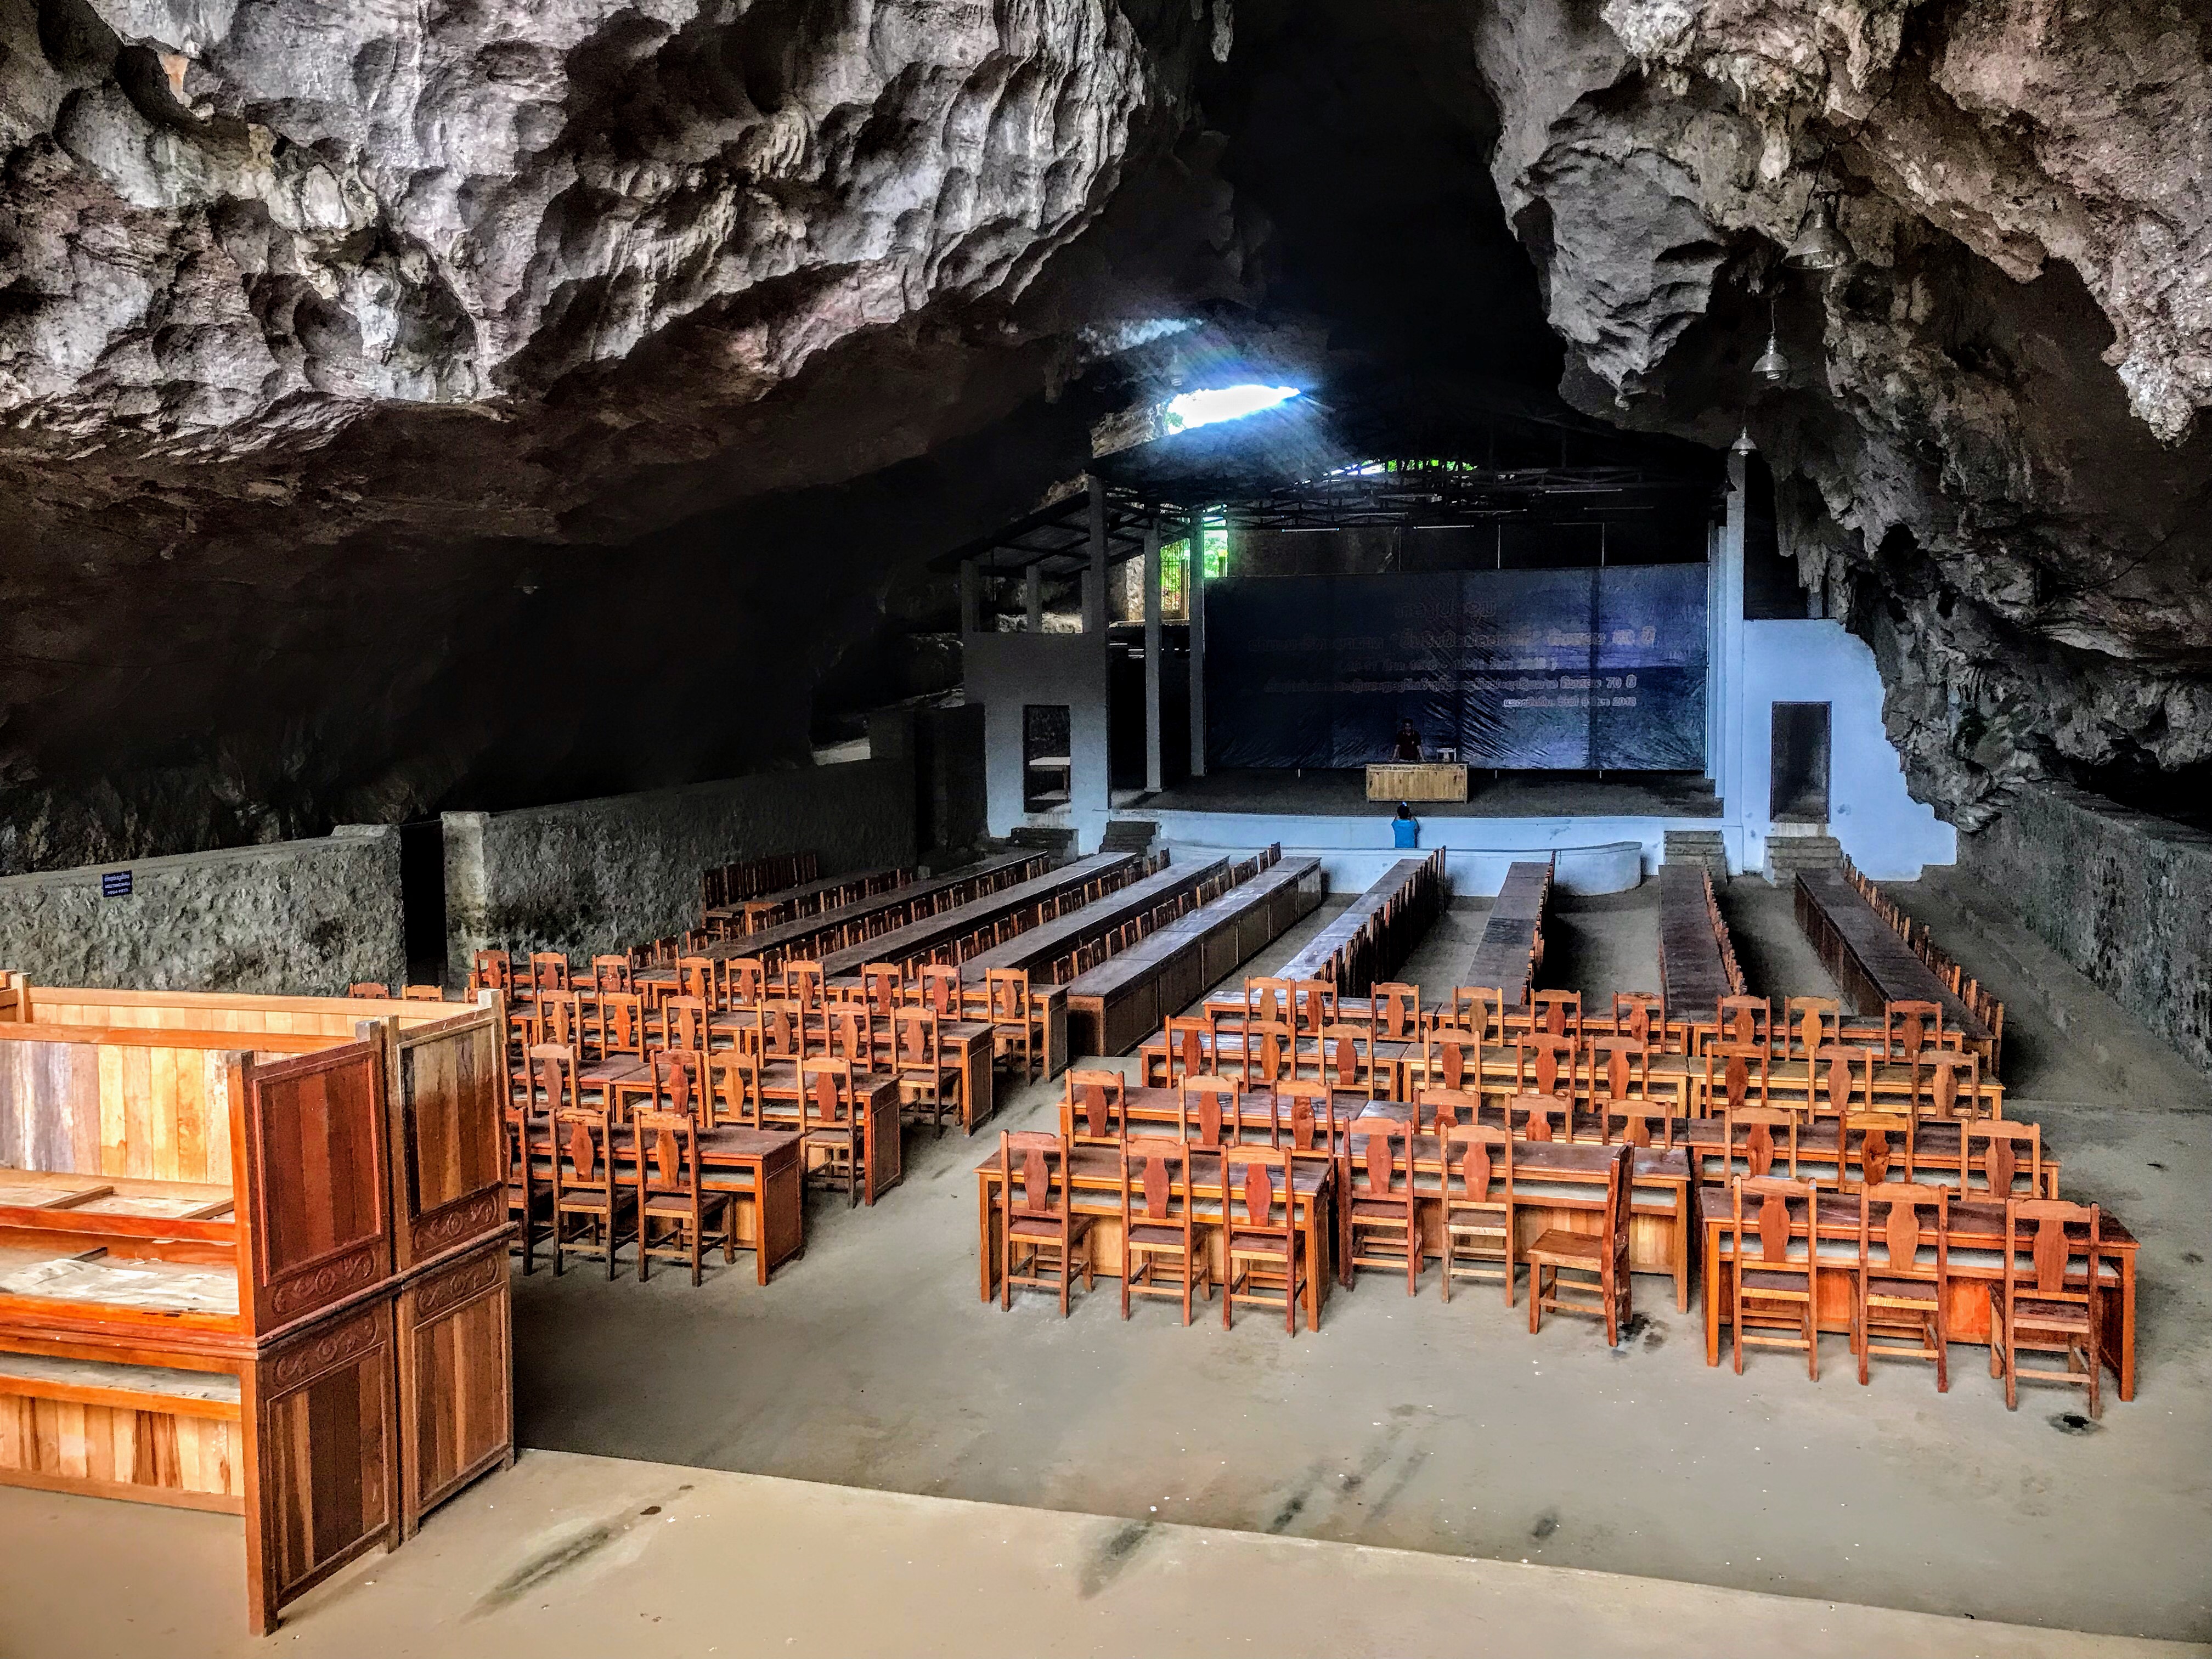 Theatre cave, Vieng Xai Caves, Laos